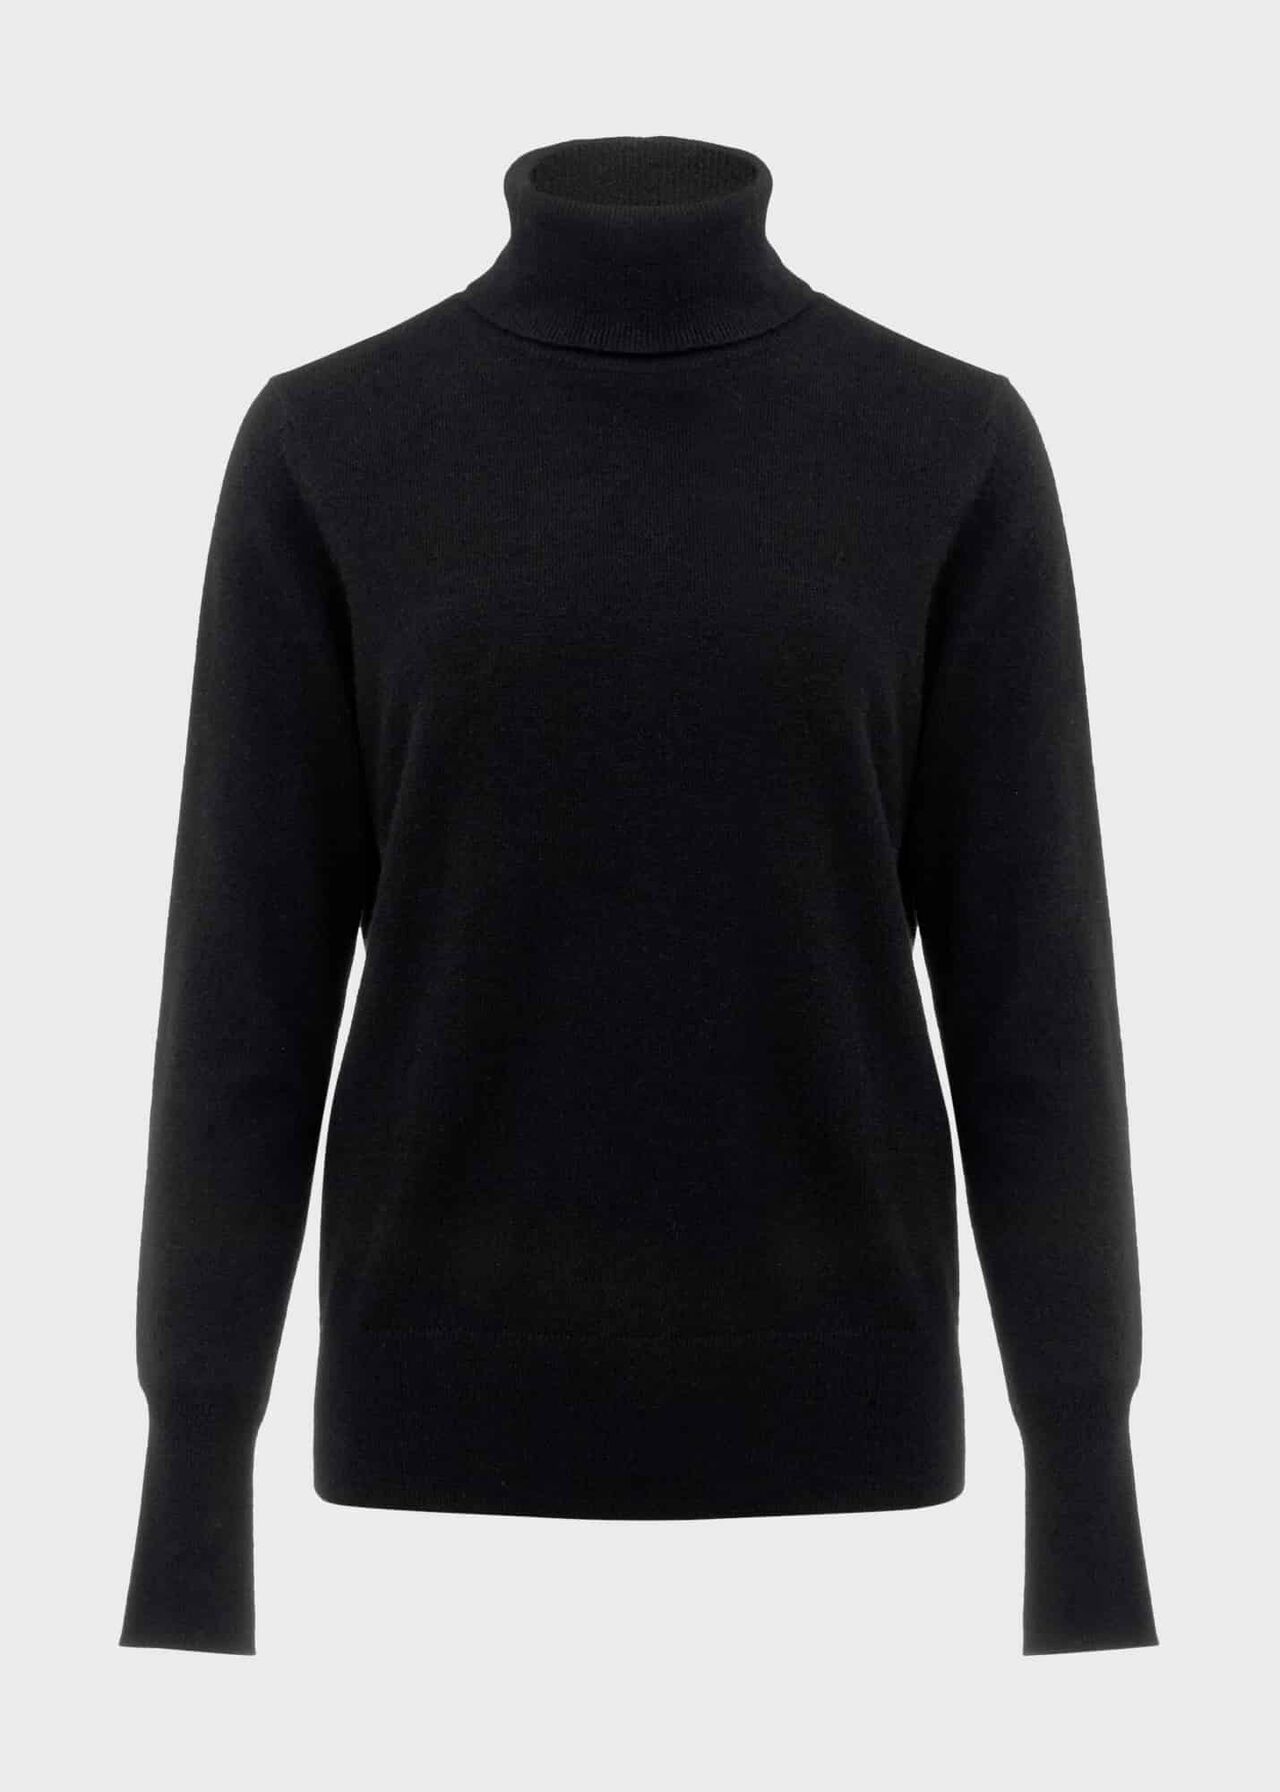 Izzy Cashmere Roll Neck Sweater, Black, hi-res